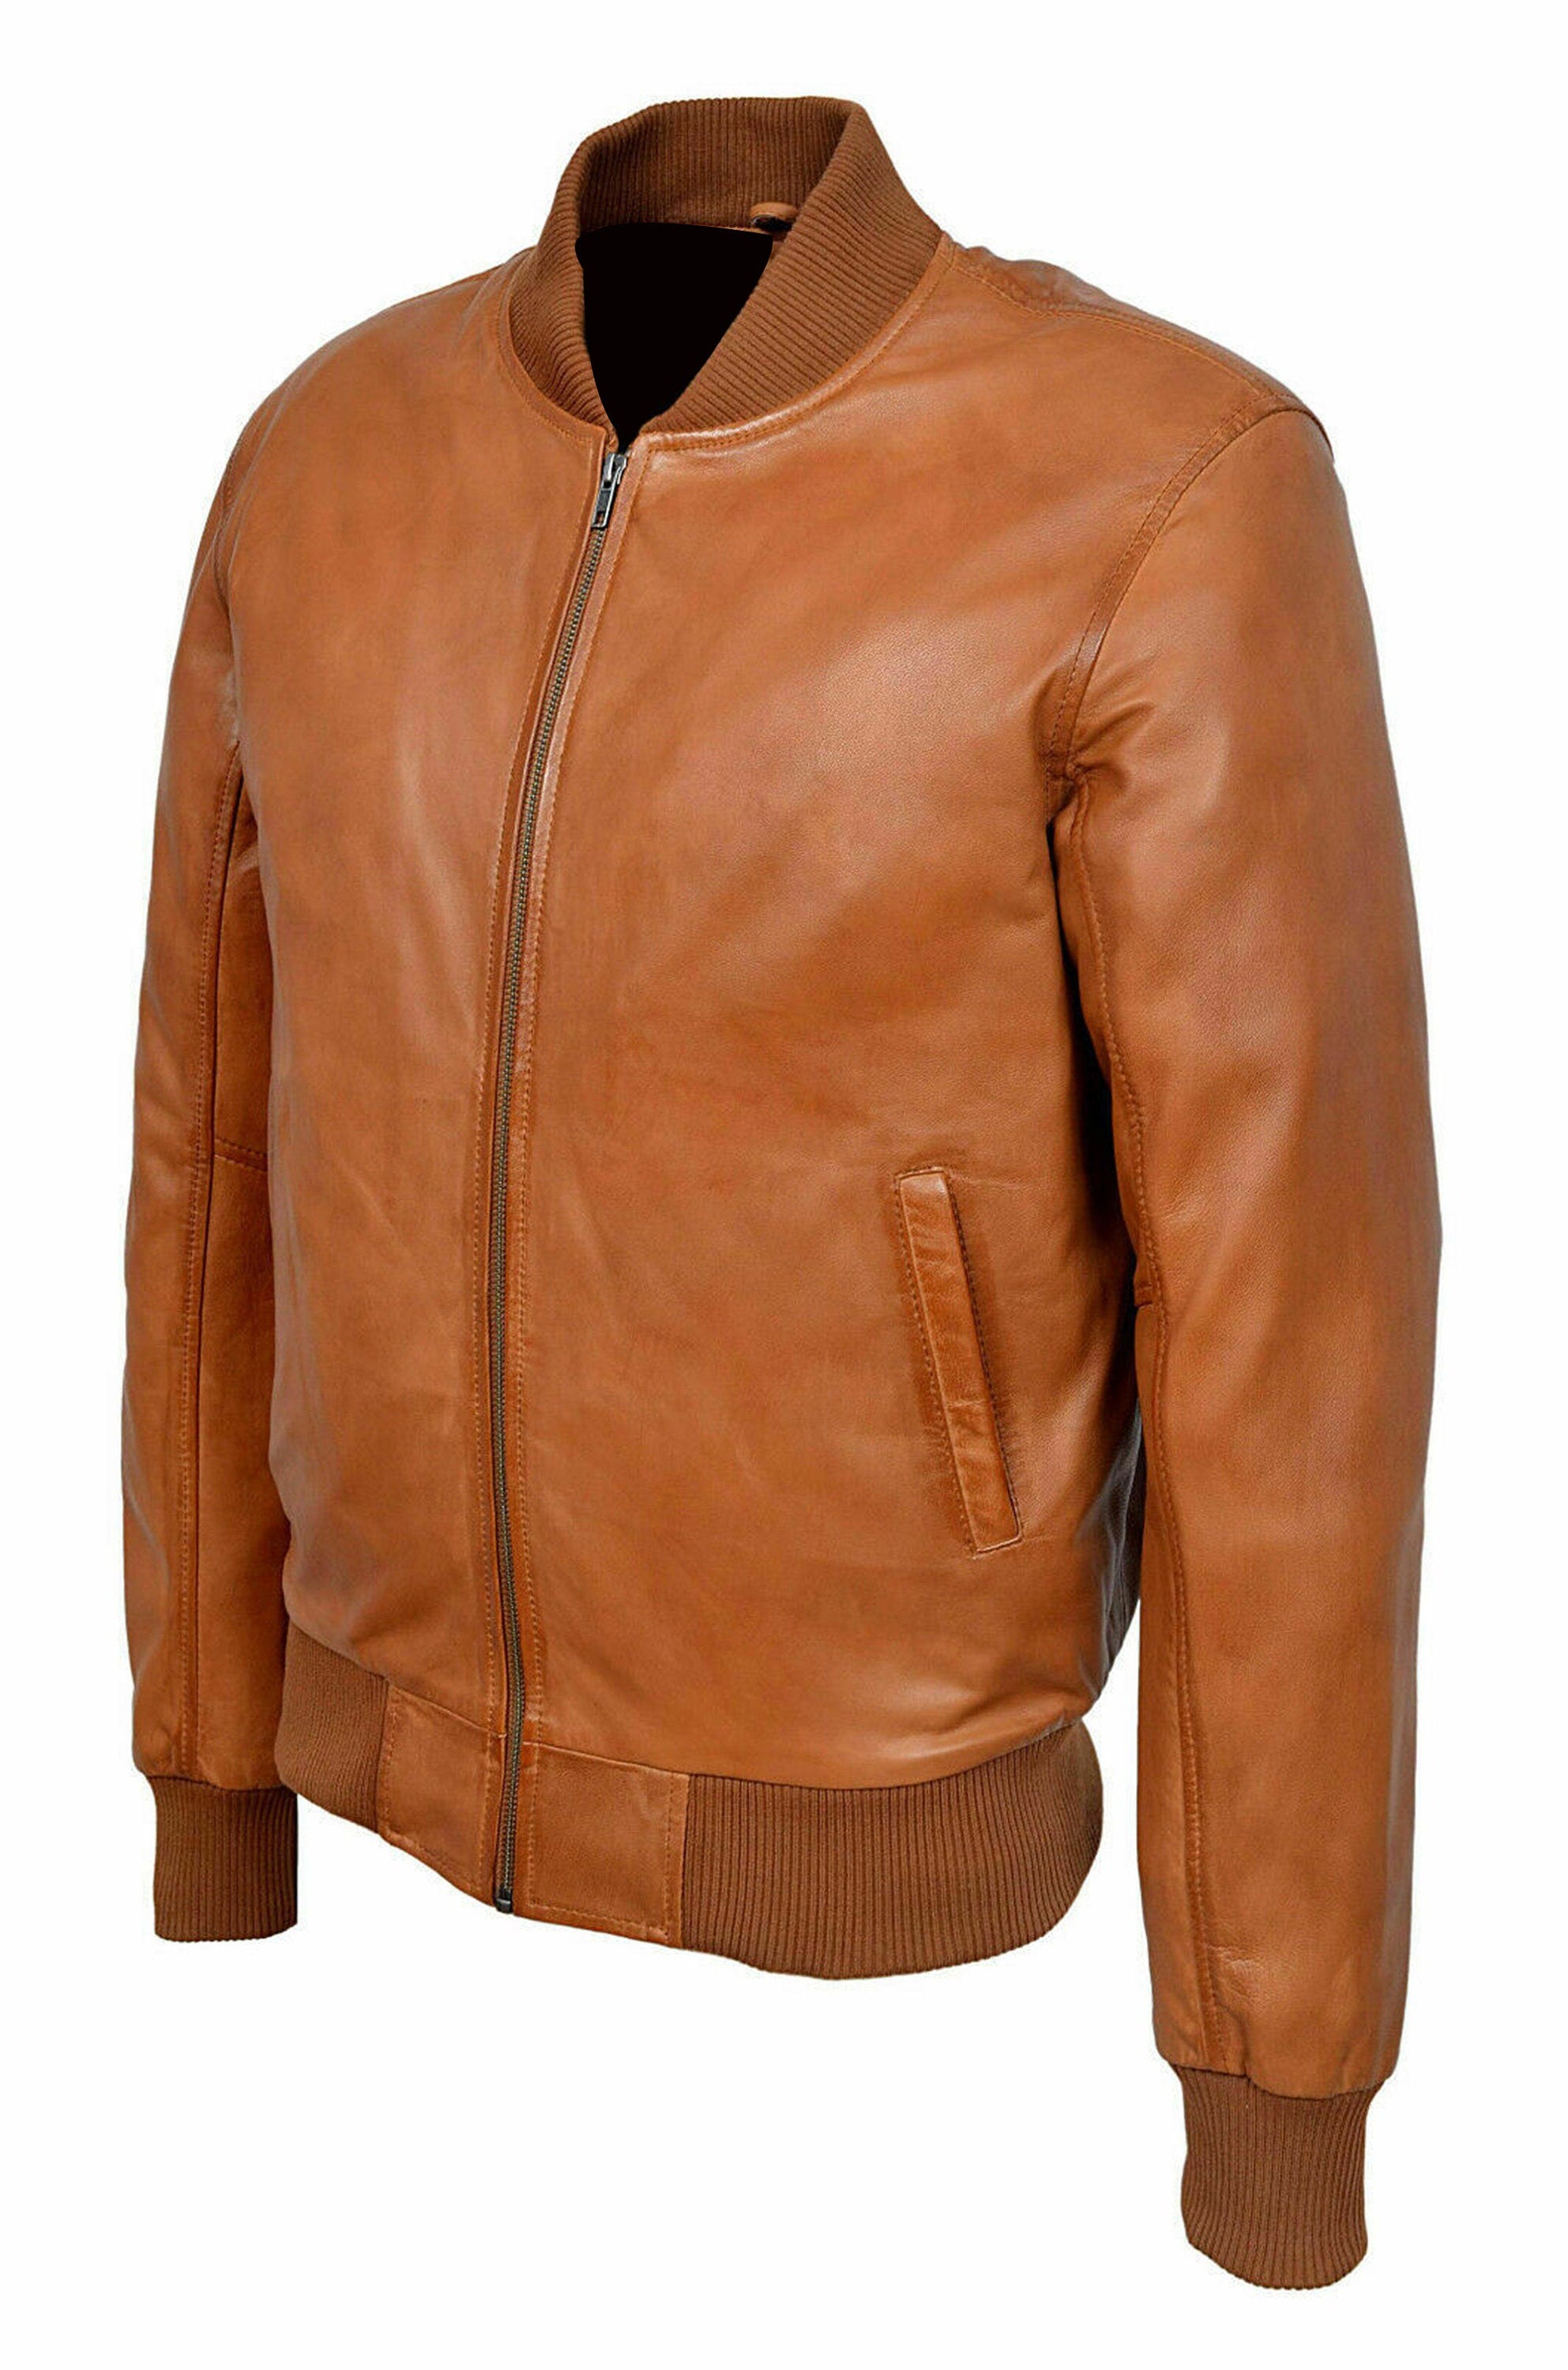 Men's Tan Wax Leather Jacket Bomber Jacket